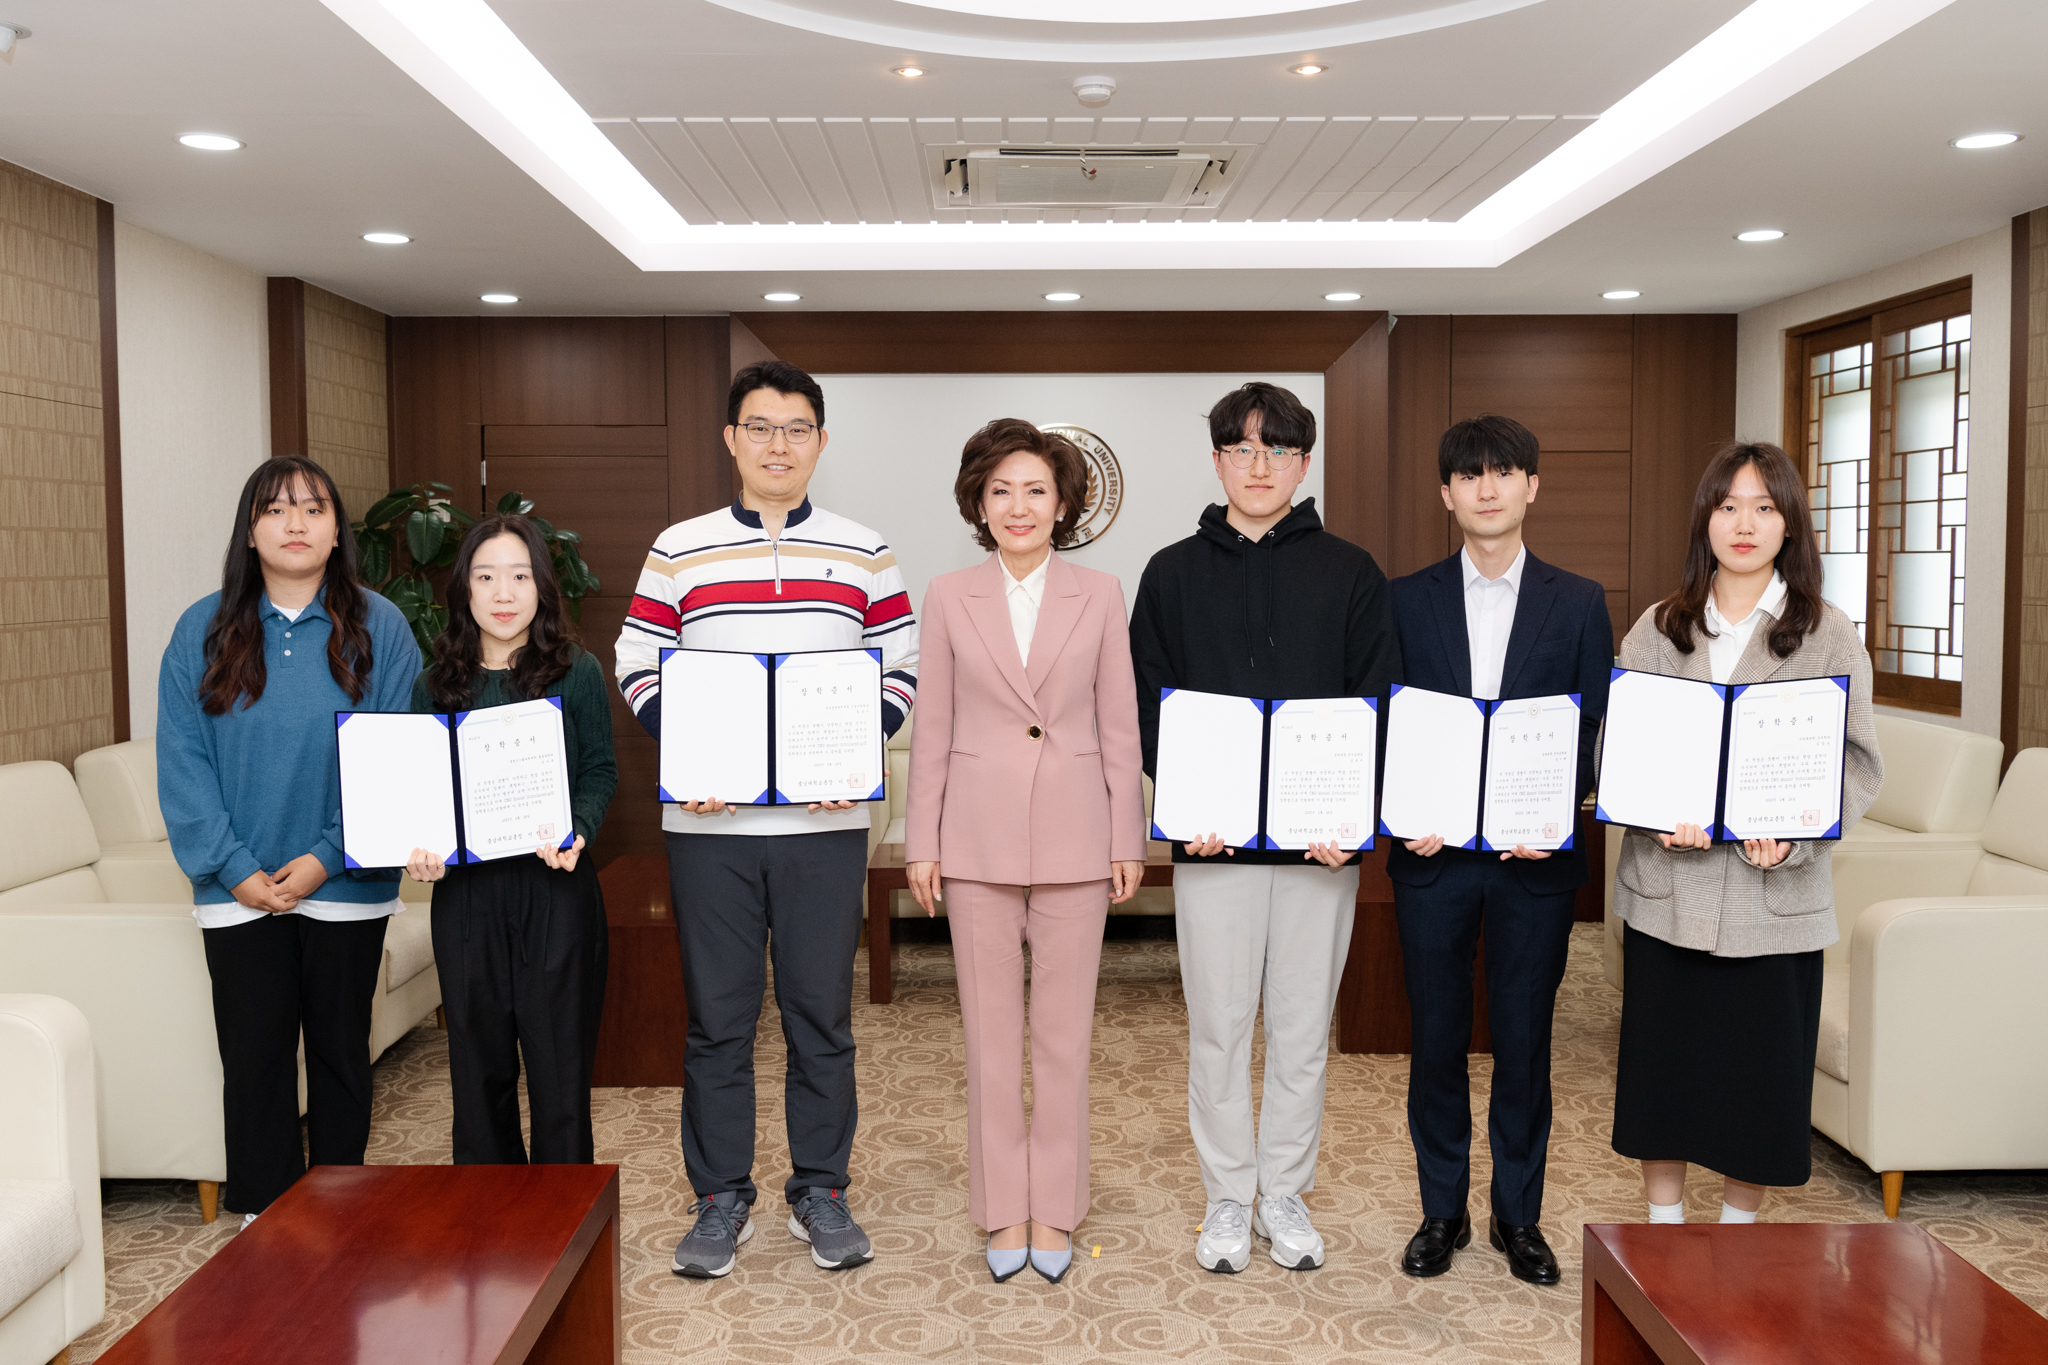 CNU Honor Scholarship 장학증서 전달식 개최 사진1